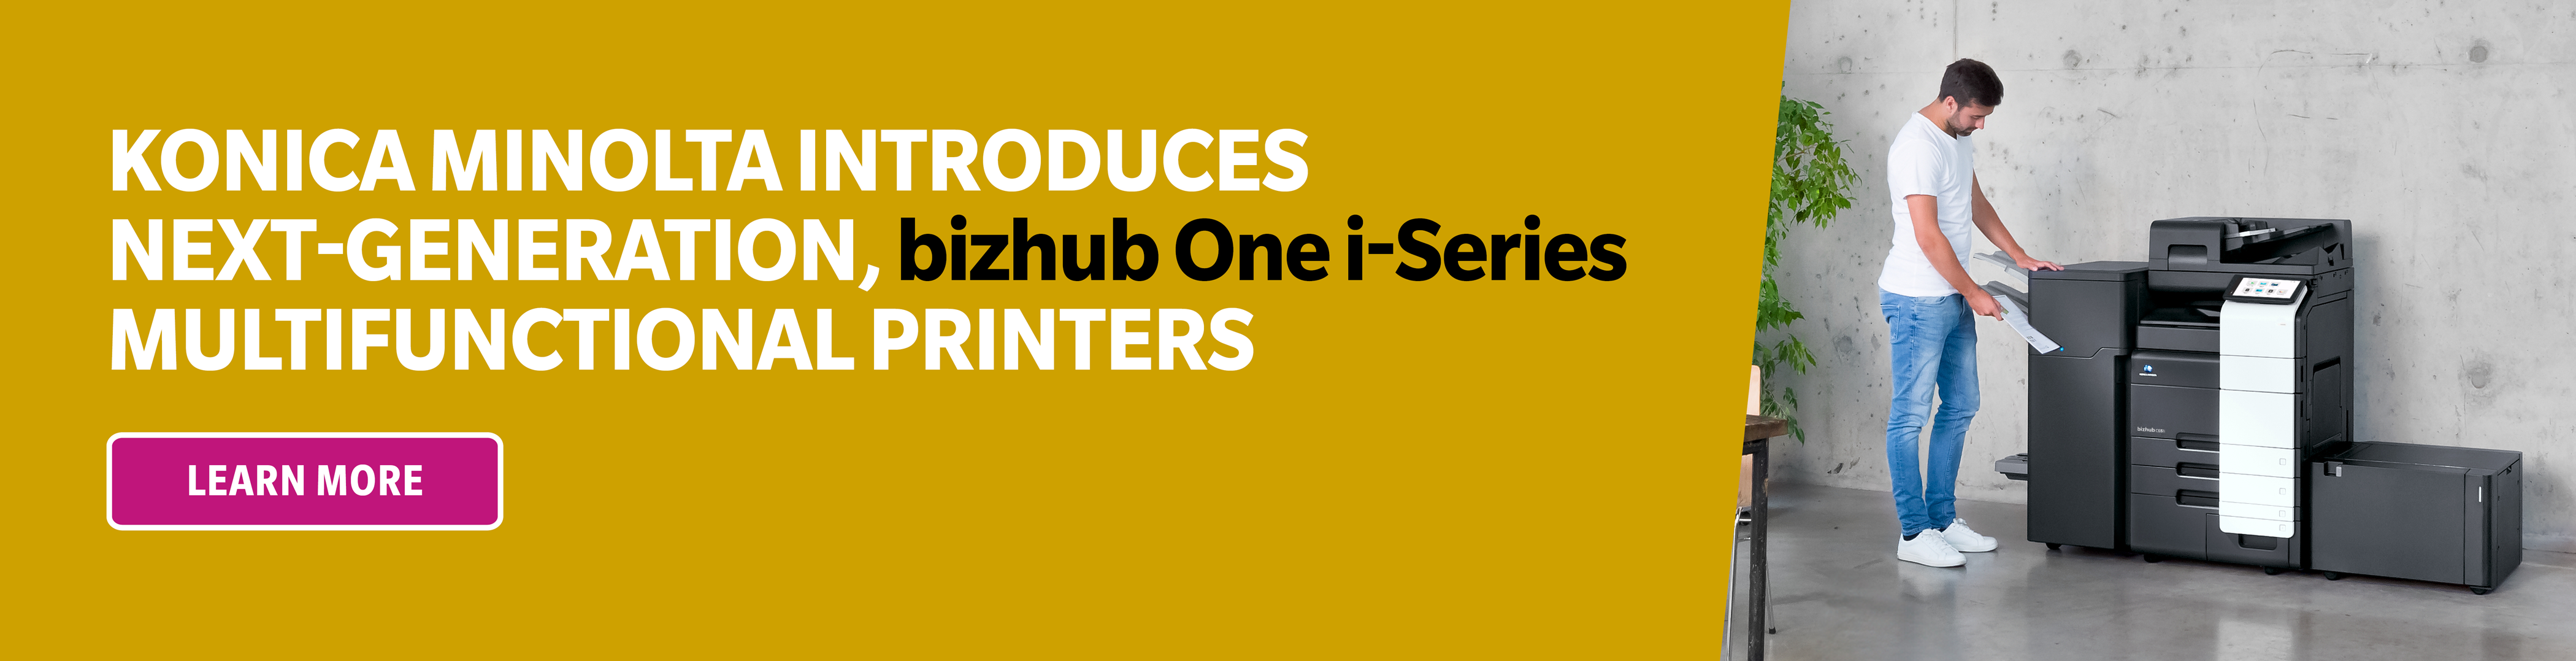 Konica Minolta Introduces Next-generation, bizhub One i-Series Multifunctional Printers